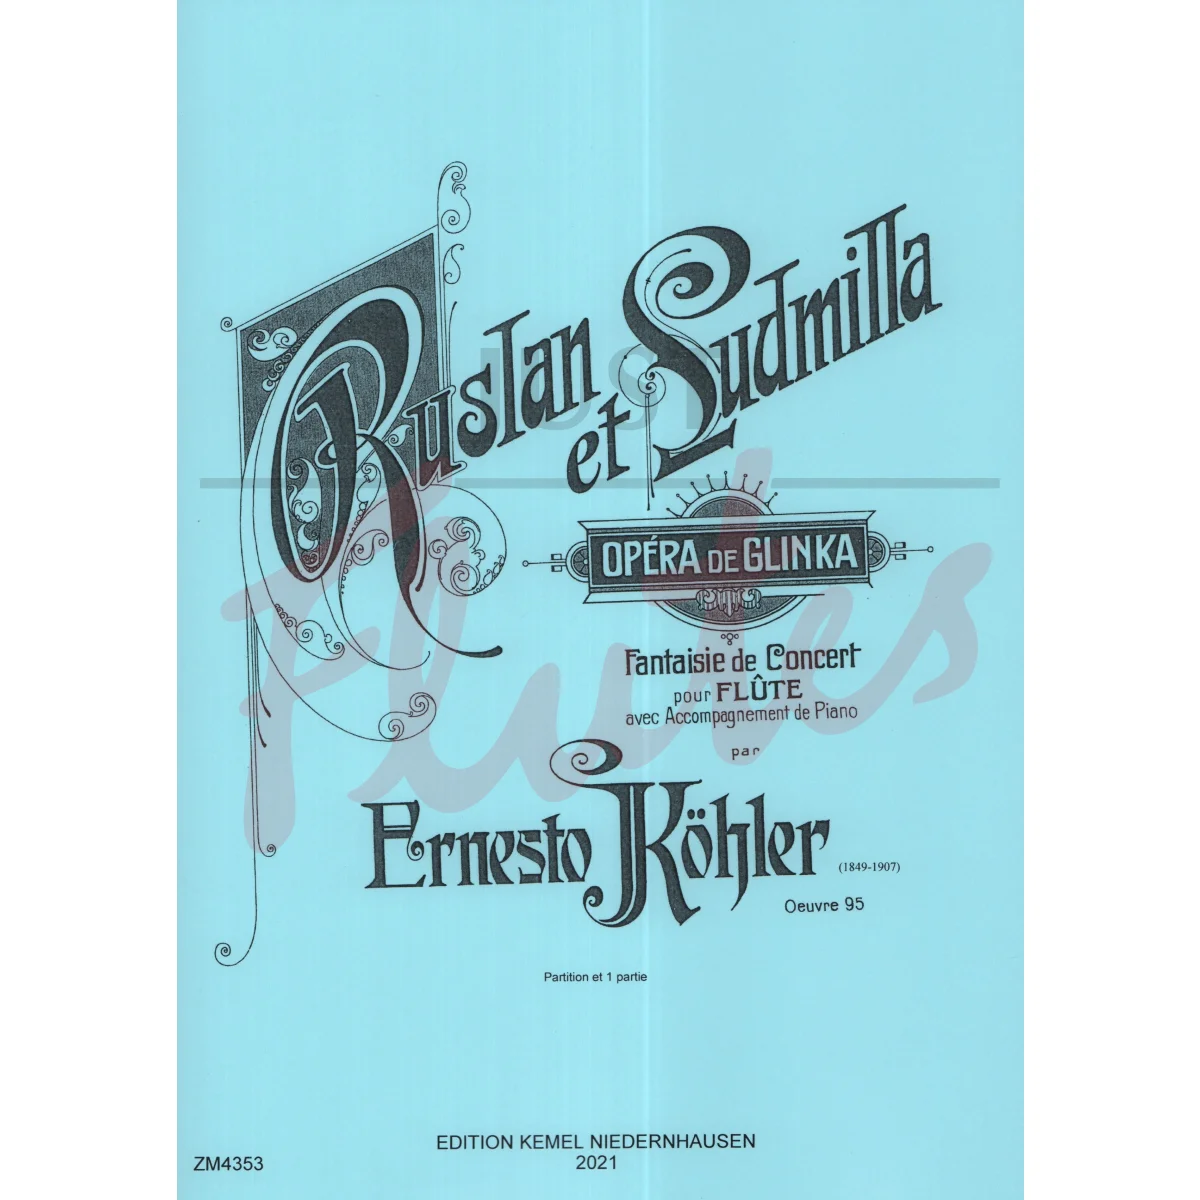 Ruslan et Ludmilla: Opera de Glinka - Fantaisie de Concert for Flute and Piano